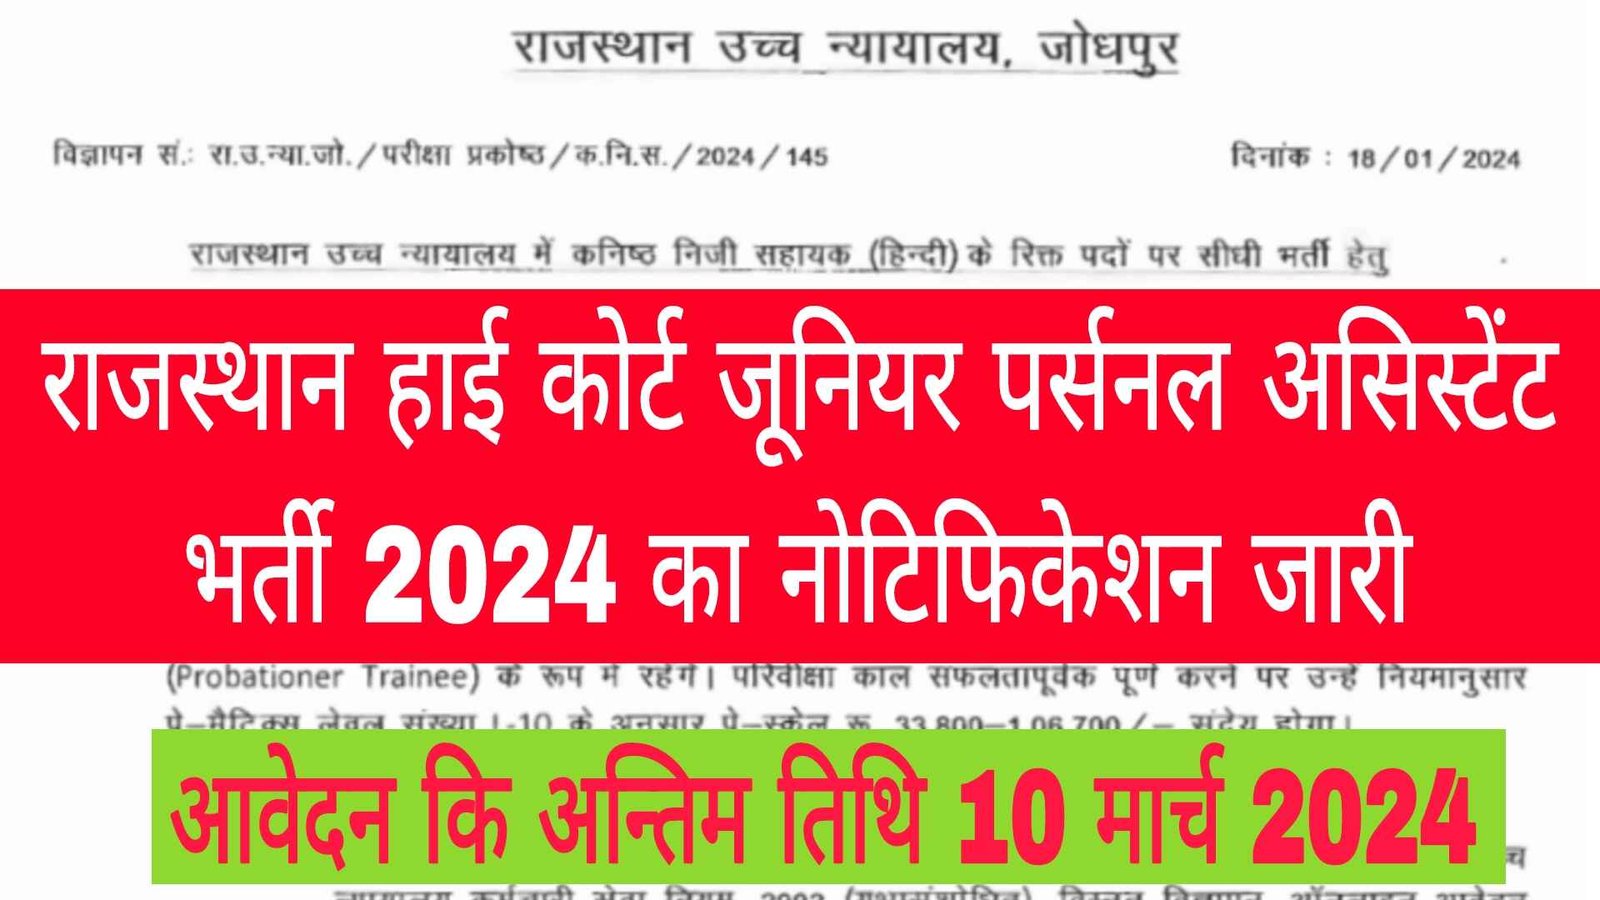 राजस्थान हाई कोर्ट जूनियर पर्सनल असिस्टेंट भर्ती 2024